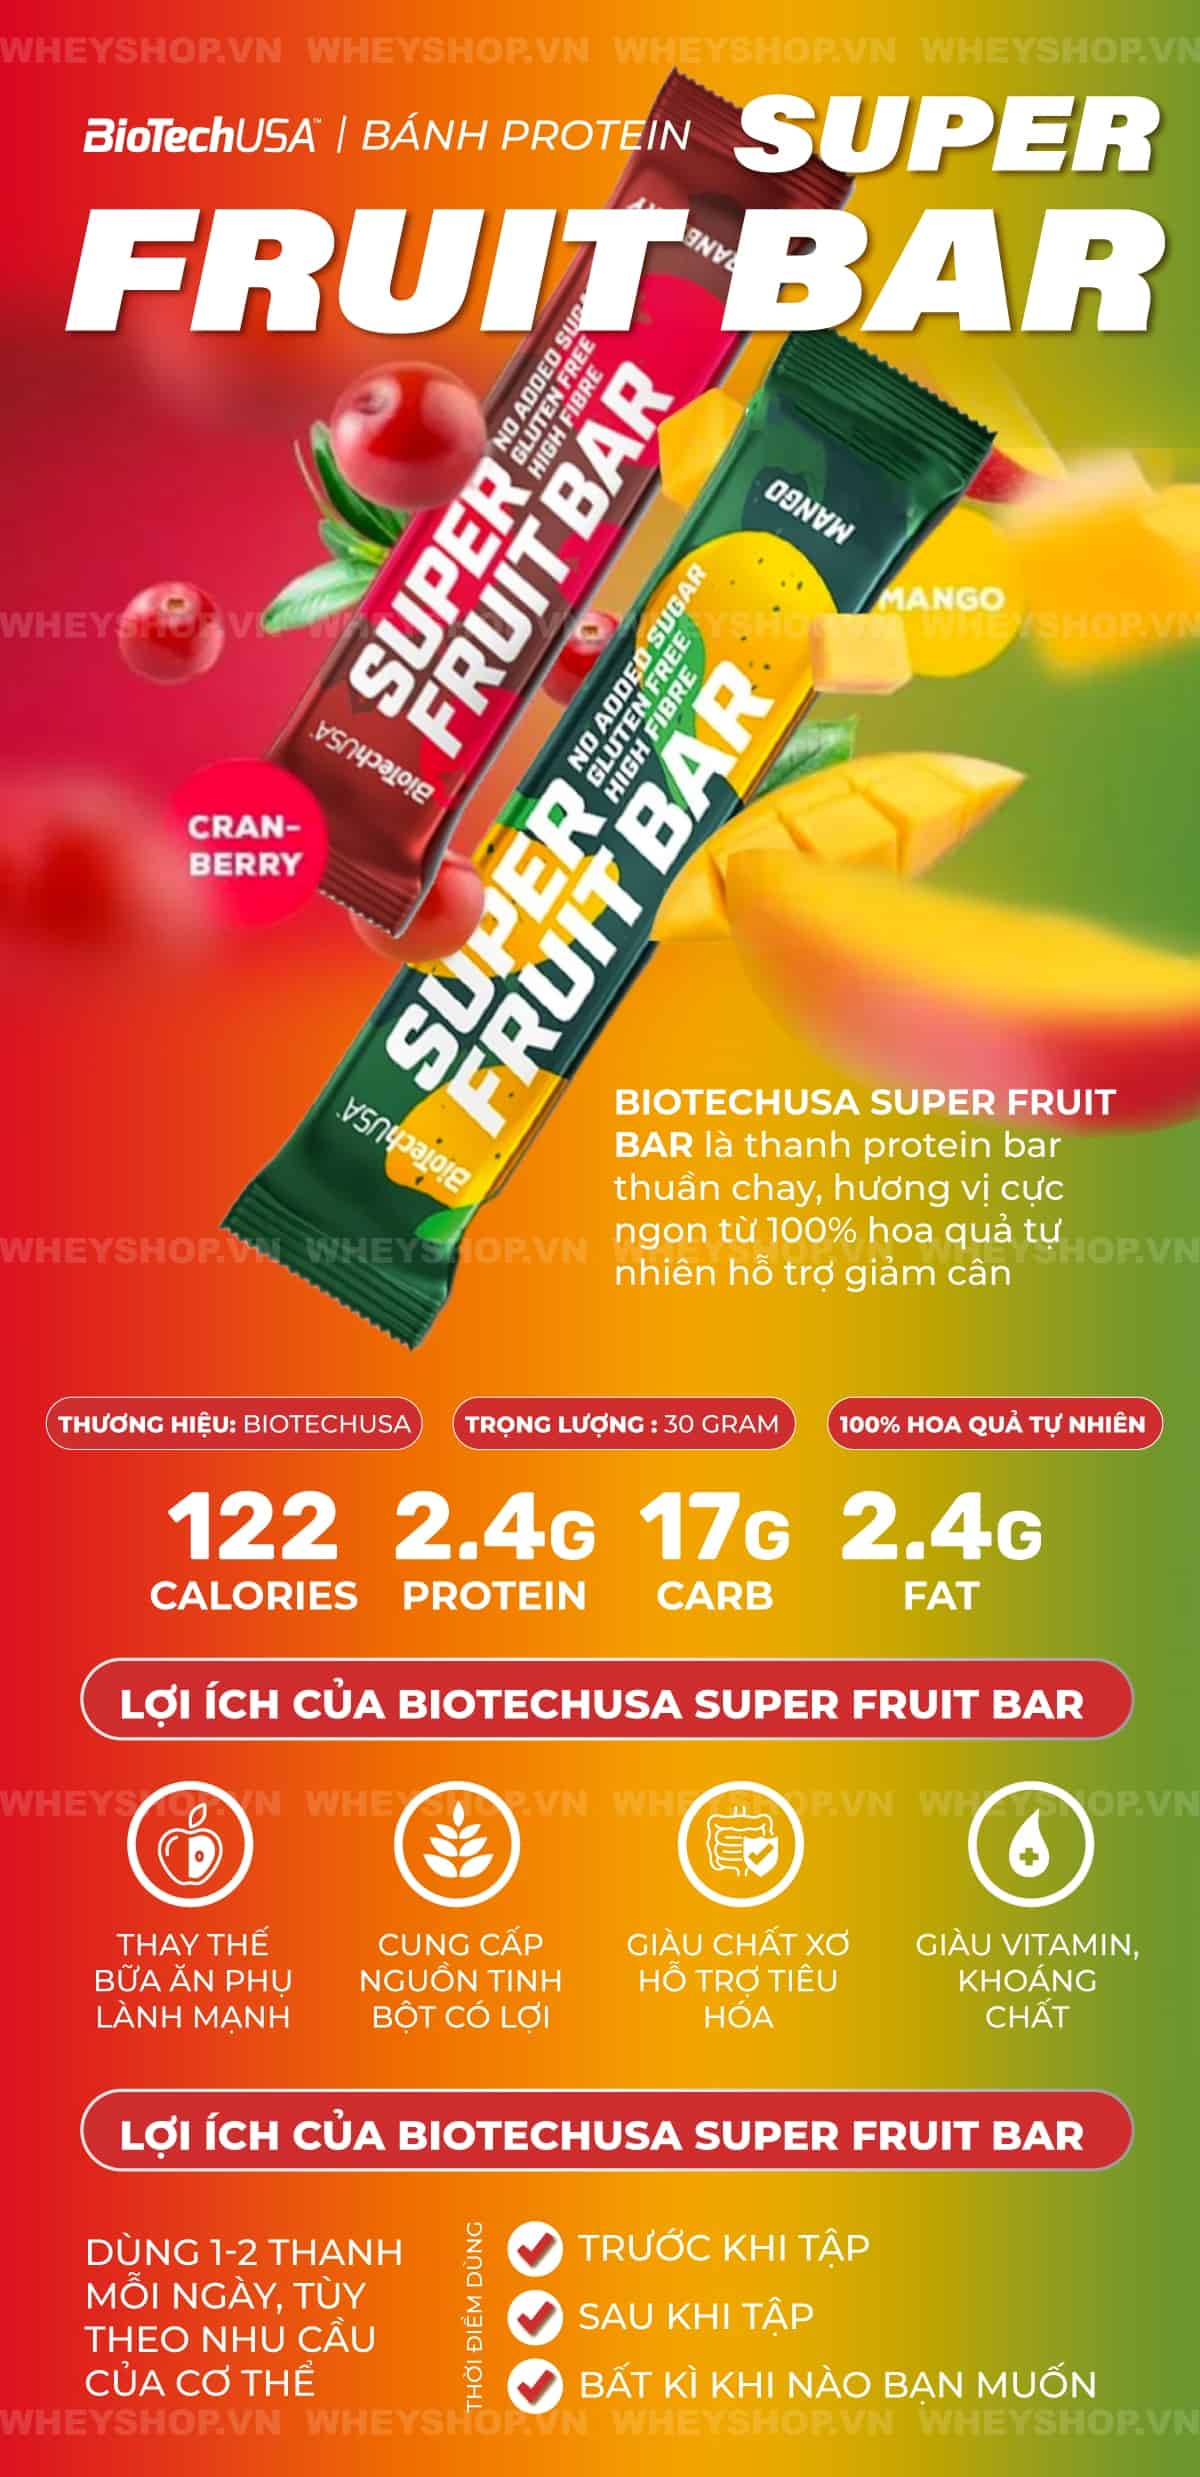 BiotechUSA Super Fruit Bar (30g) - Ưu Đãi Mua 1 Tặng 1